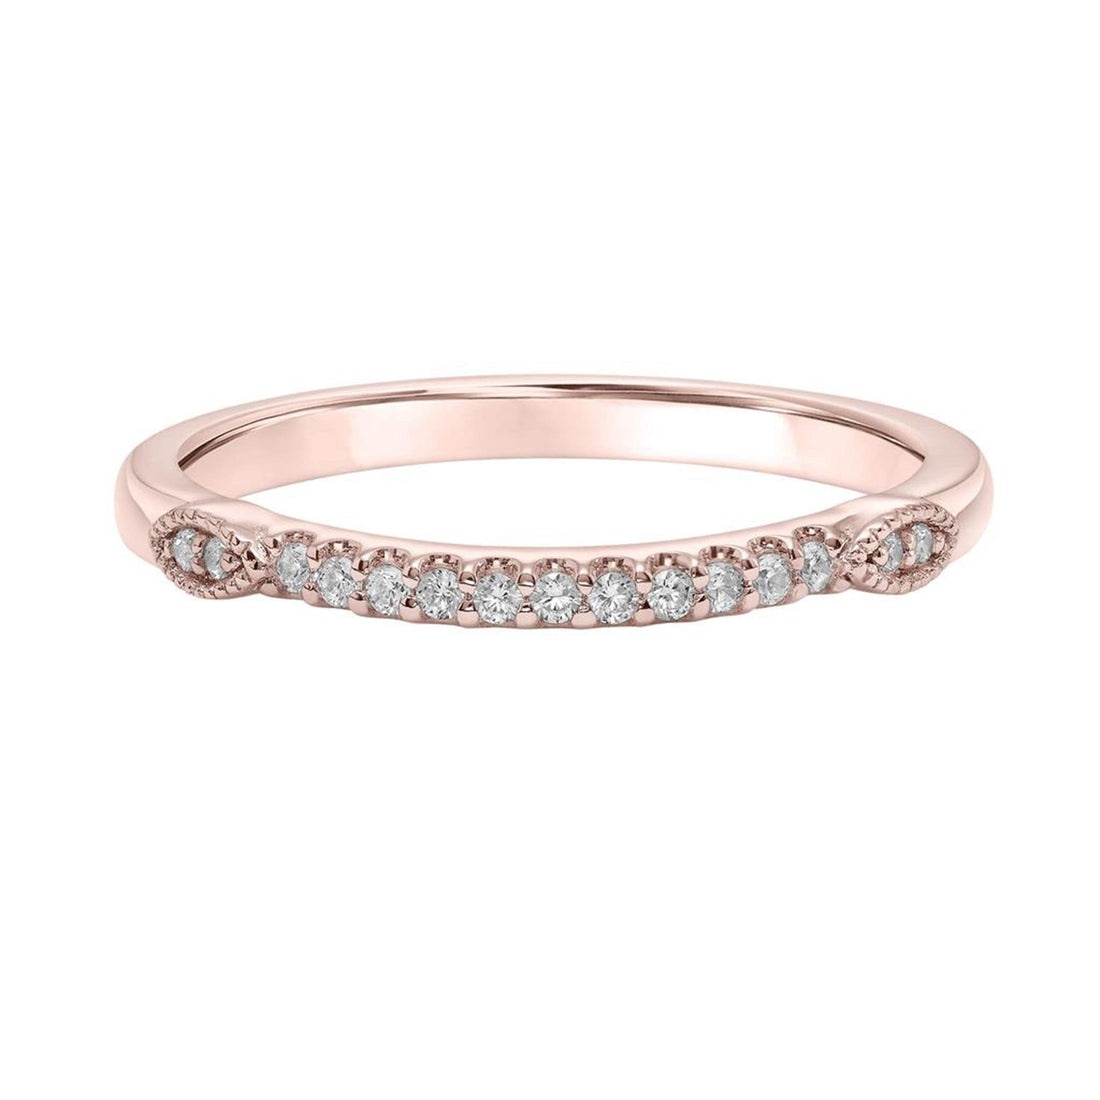 Rose Gold Diamond Milgrain Accent Wedding Band Ring - Skeie's Jewelers